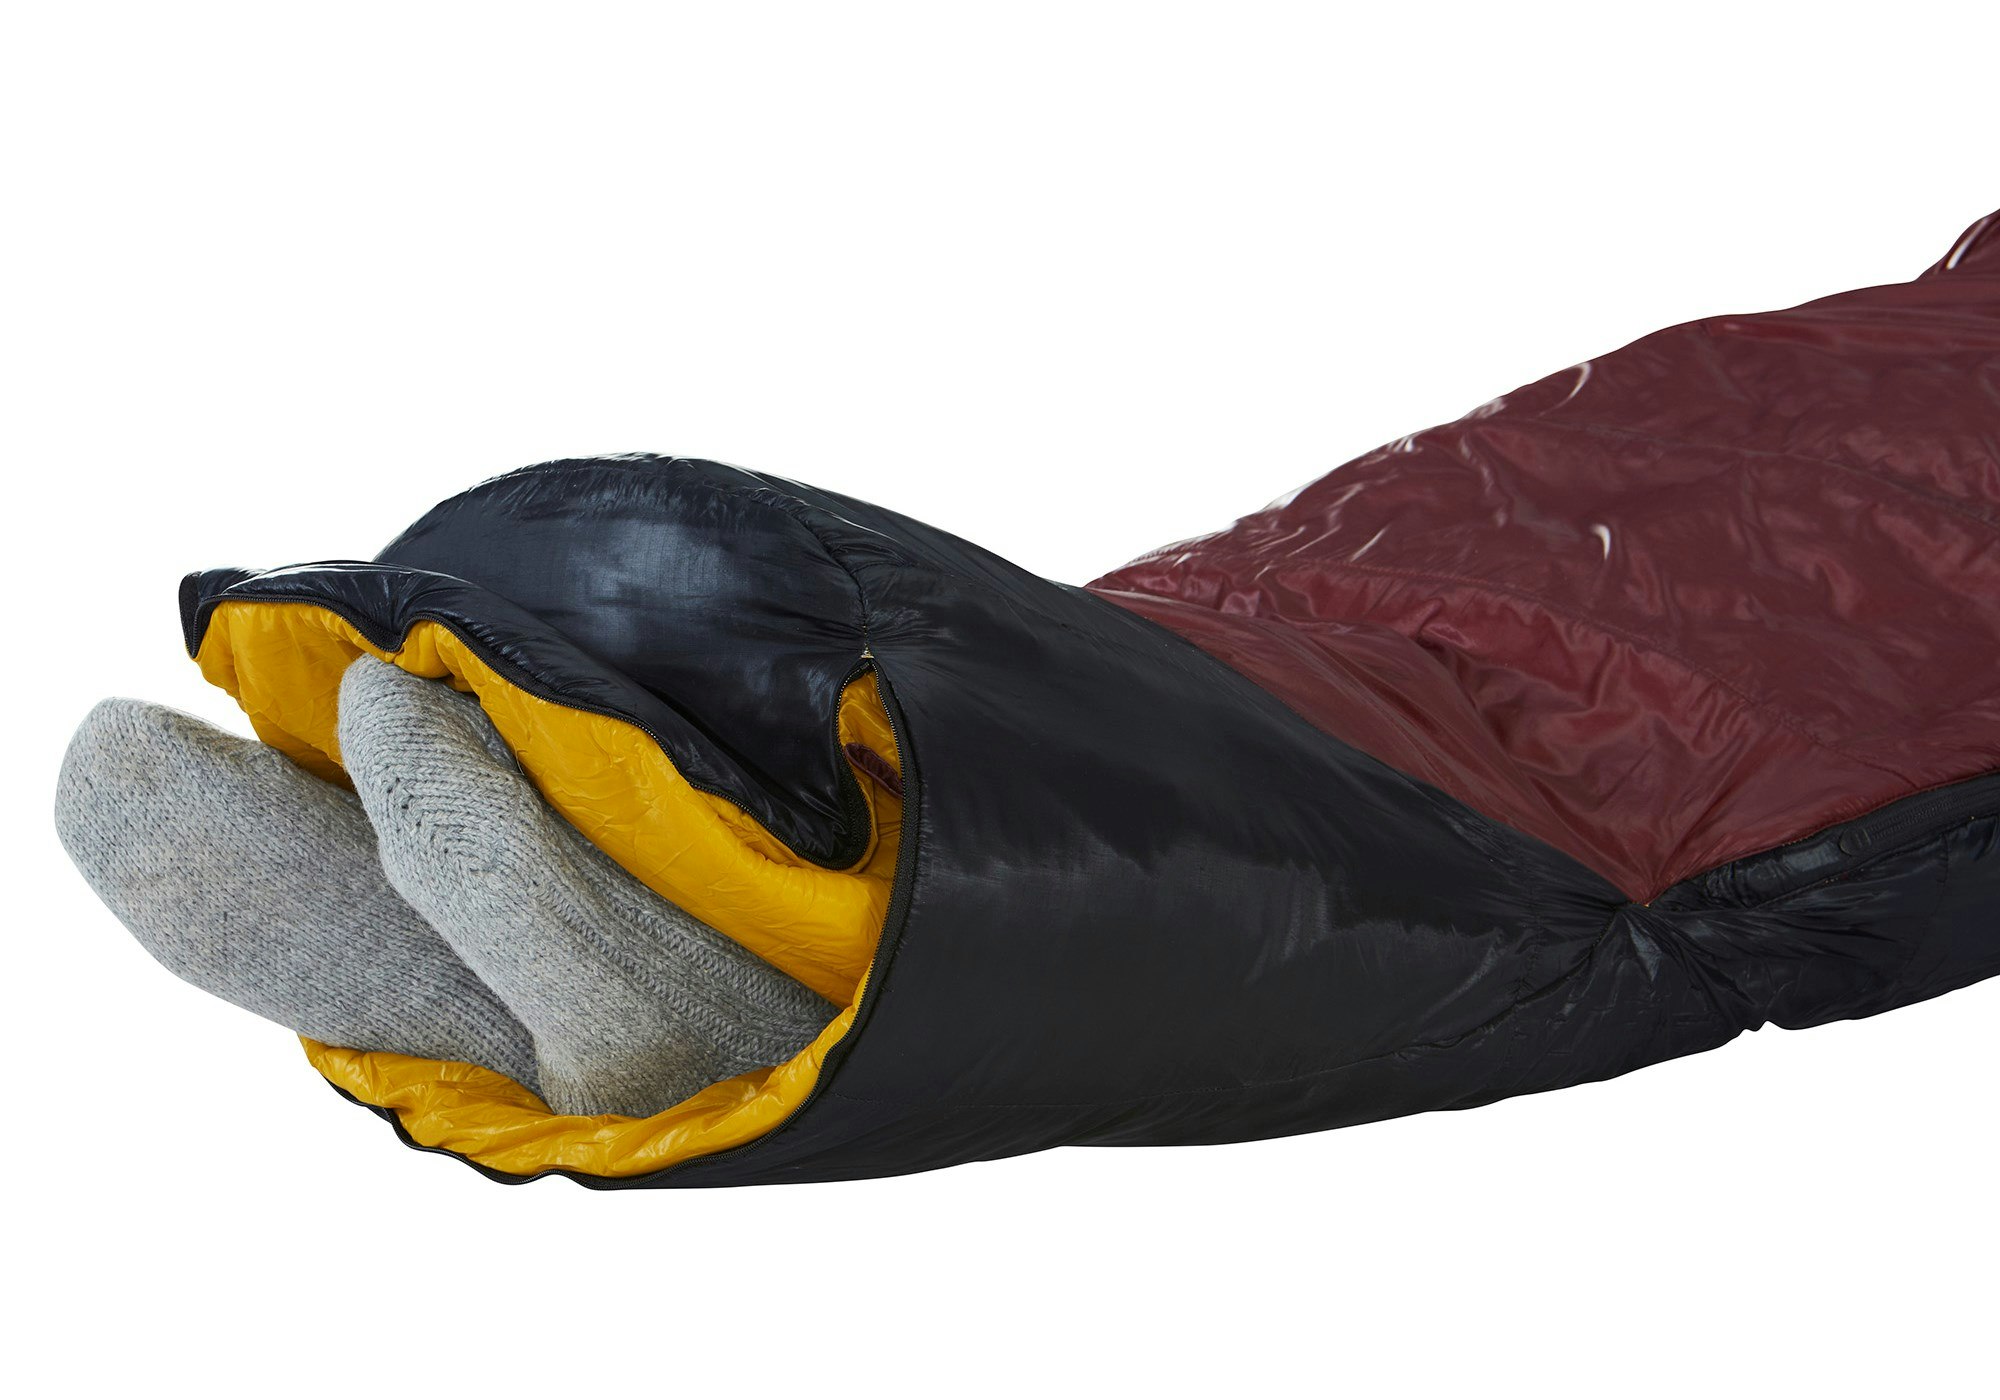 Nordisk Oscar -2° Curve sleeping bag Medium